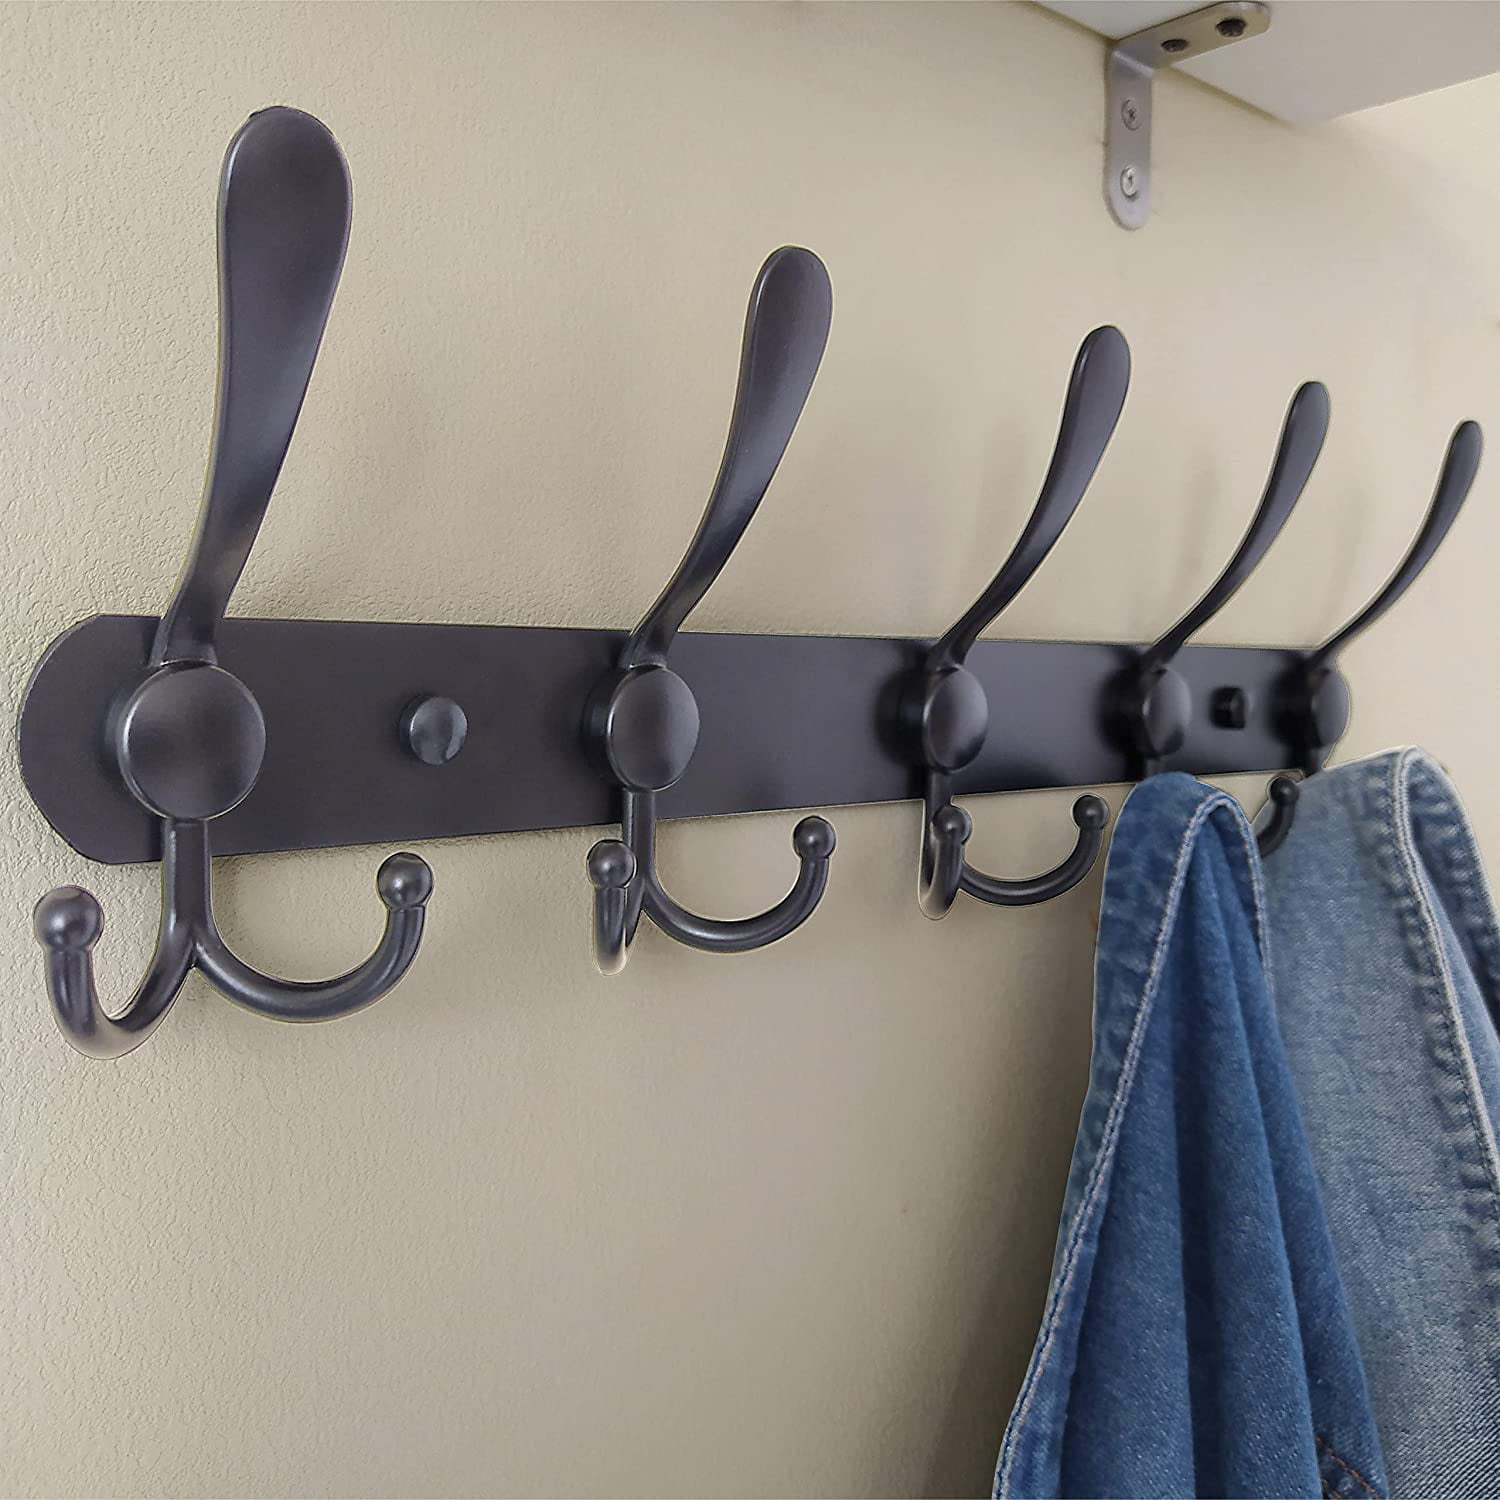 Dseap Coat Rack Wall Mount - 38” Long 10-Tri-Hooks Heavy Duty Coat Hanger  Rail Wall Hooks for Hanging Coats Hats Clothing Clothes Purse Mudroom